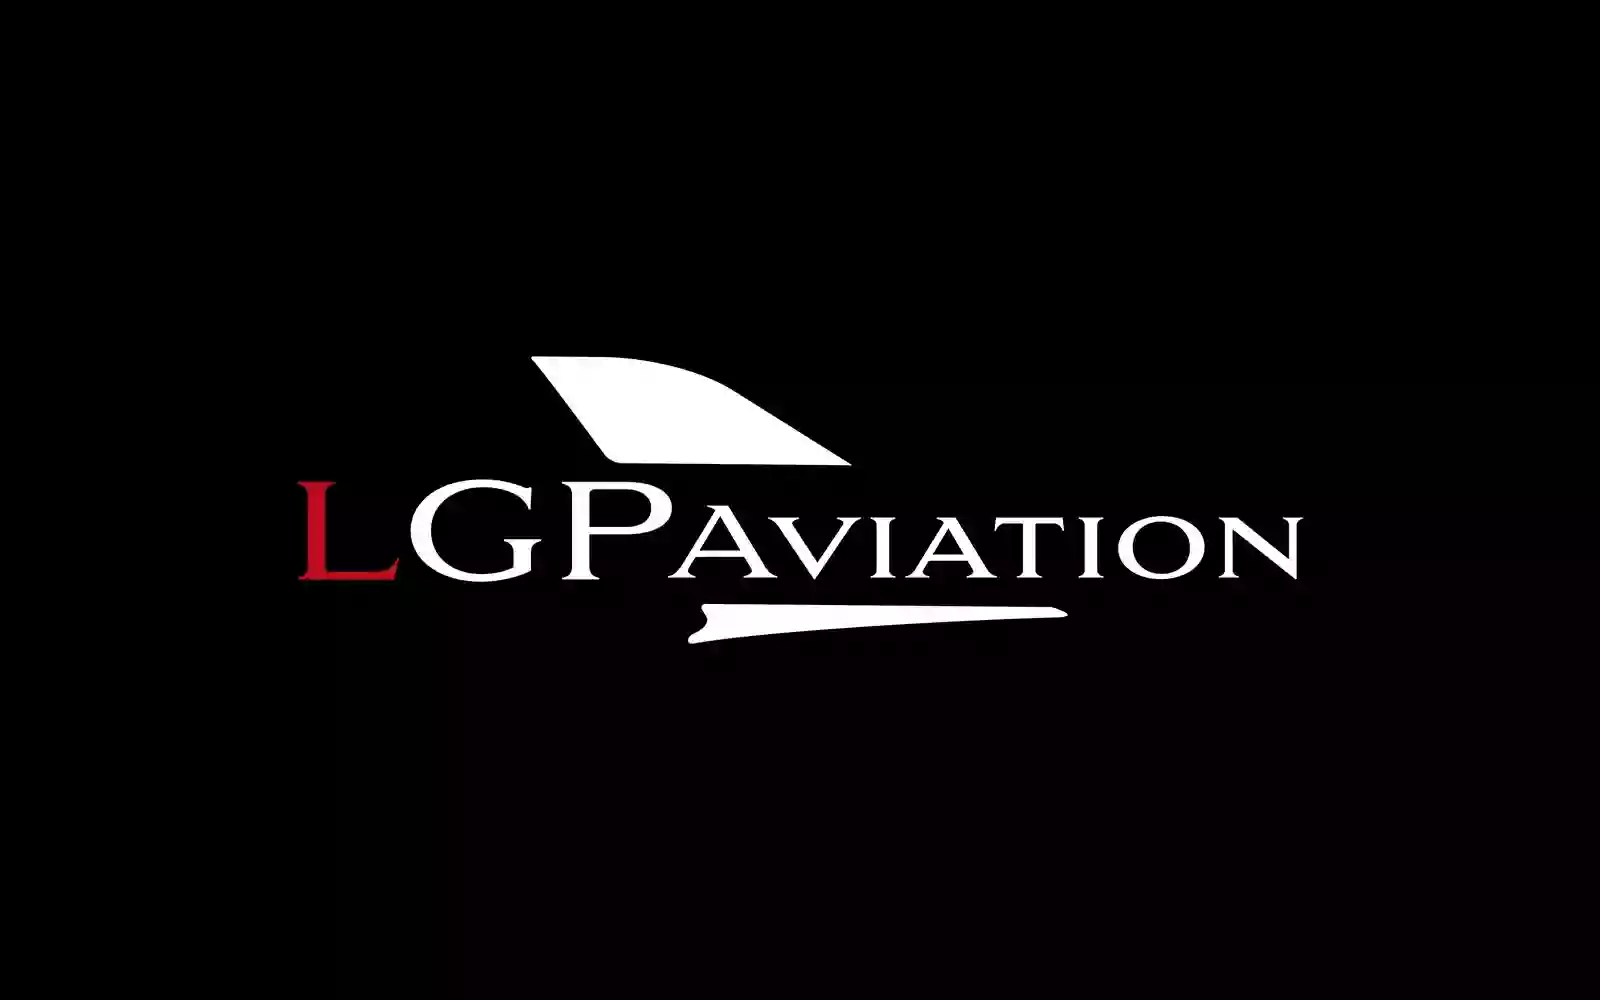 LGP Aviation